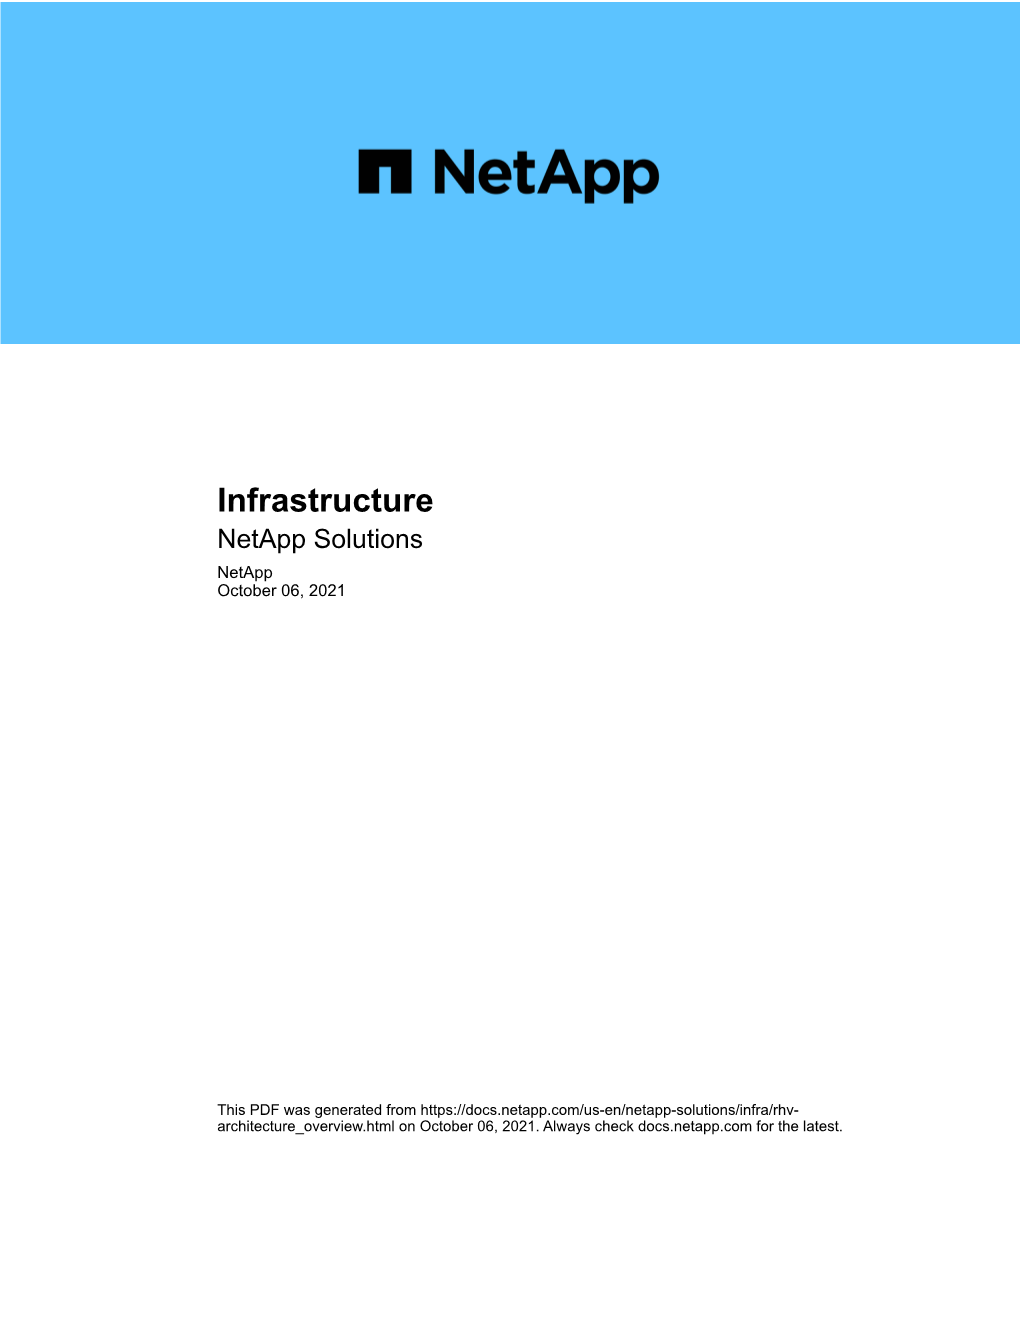 Infrastructure : Netapp Solutions